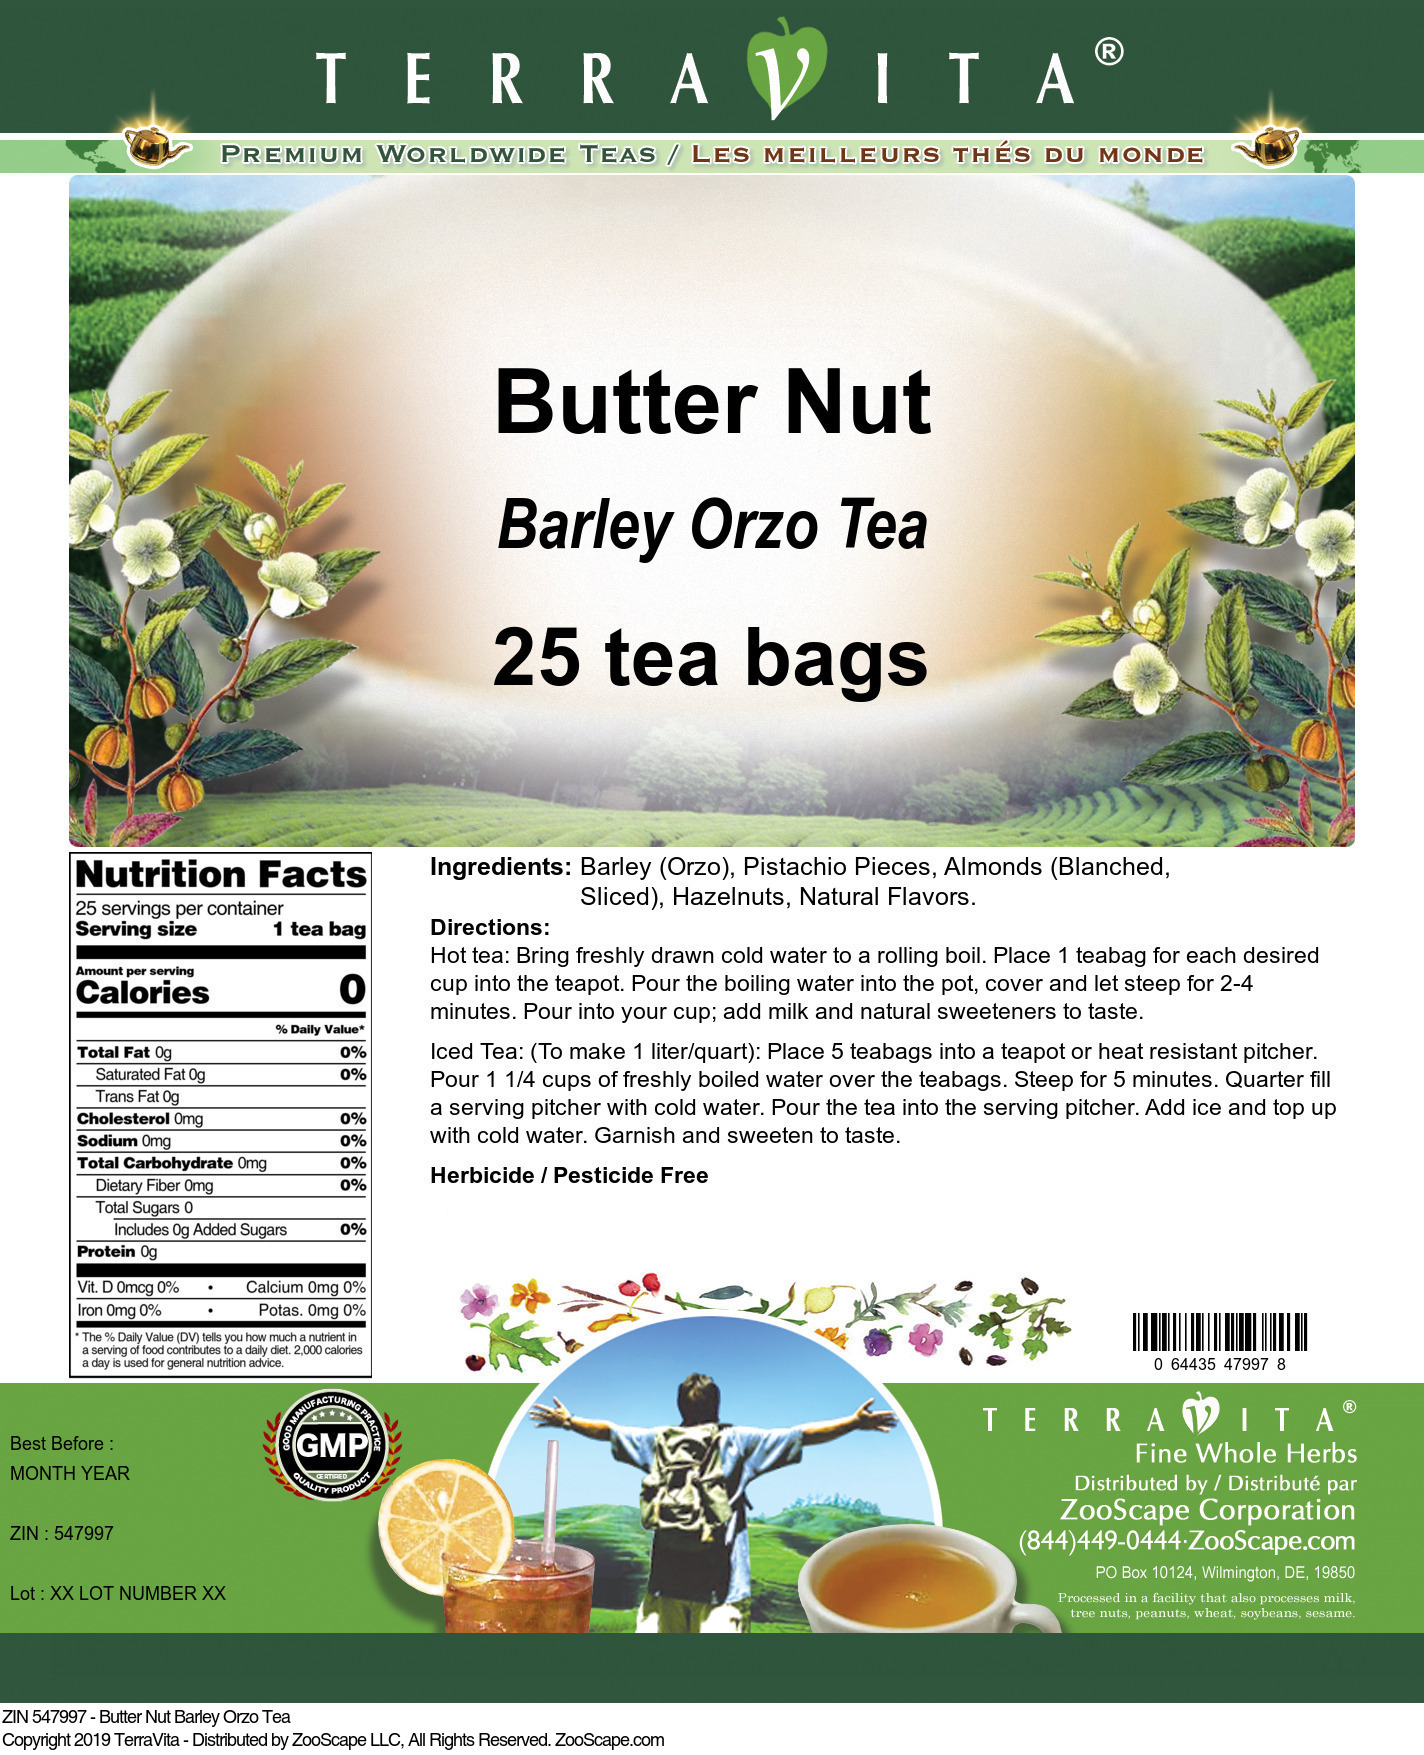 Butter Nut Barley Orzo Tea - Label